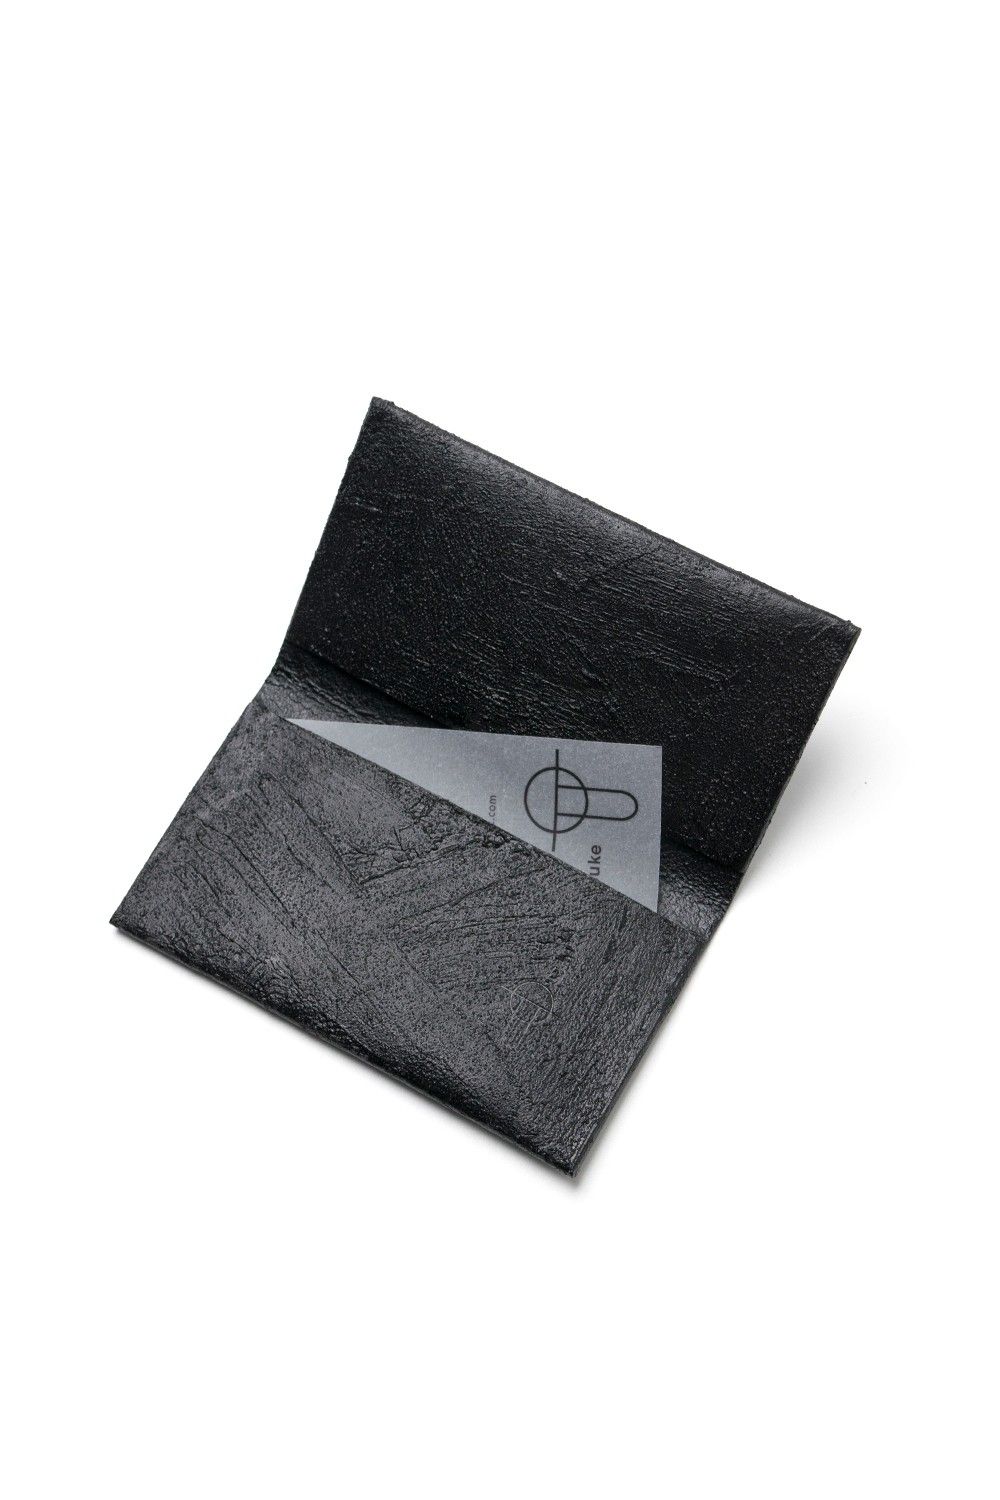 KAGARI YUSUKE - 【ラスト1点】カードケース(名刺入れ) [黒い壁] / C01 